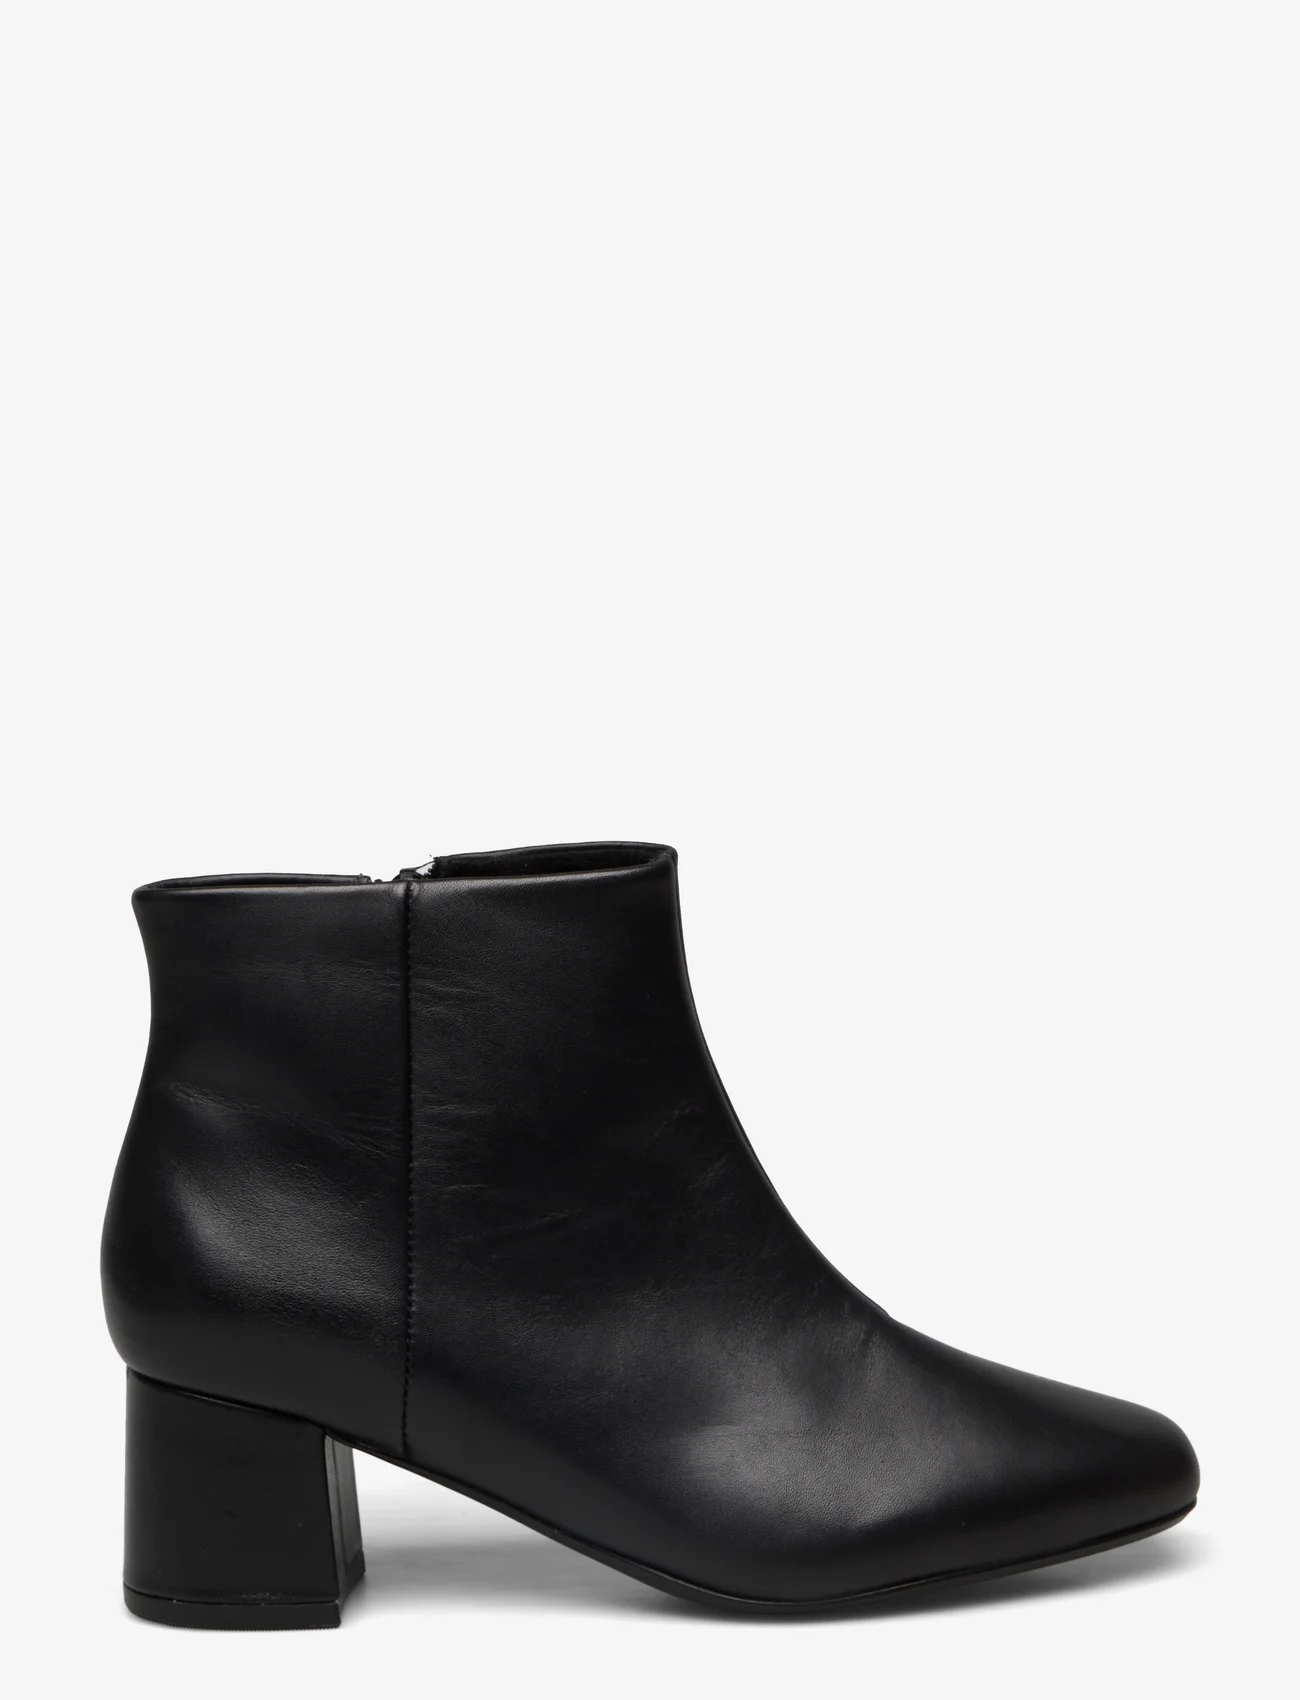 Clarks - Sheer Flora 2 - high heel - black leather - 1